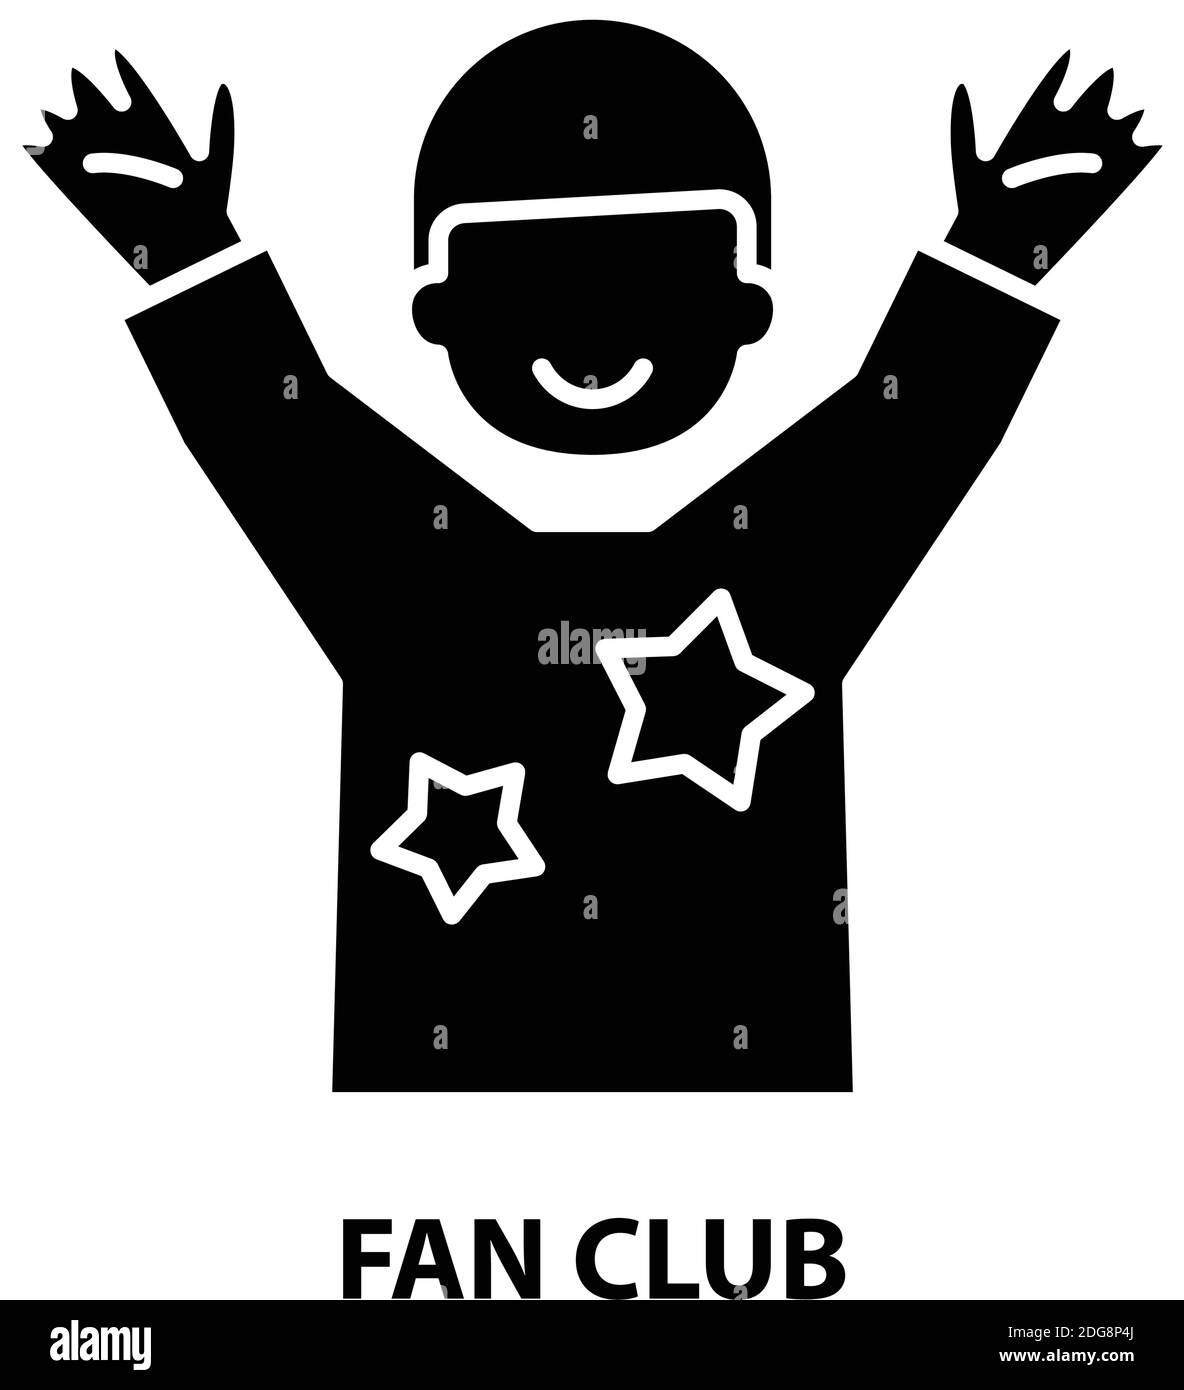 fan club symbol icon, black vector sign with editable strokes, concept illustration Stock Vector